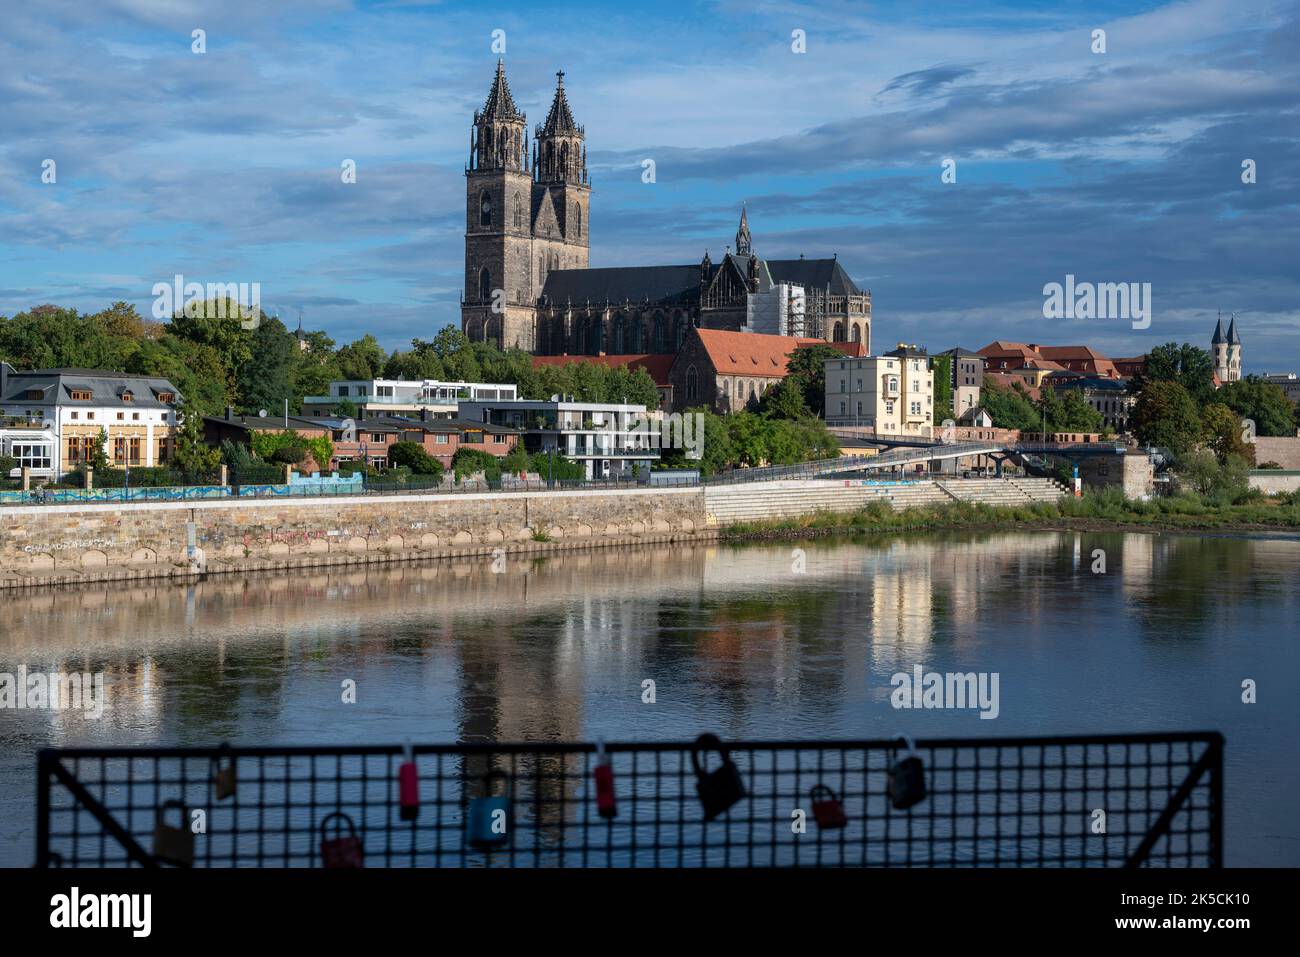 Cattedrale di Magdeburgo, Elbe Promenade, Fiume Elba, Magdeburgo, Sassonia-Anhalt, Germania Foto Stock